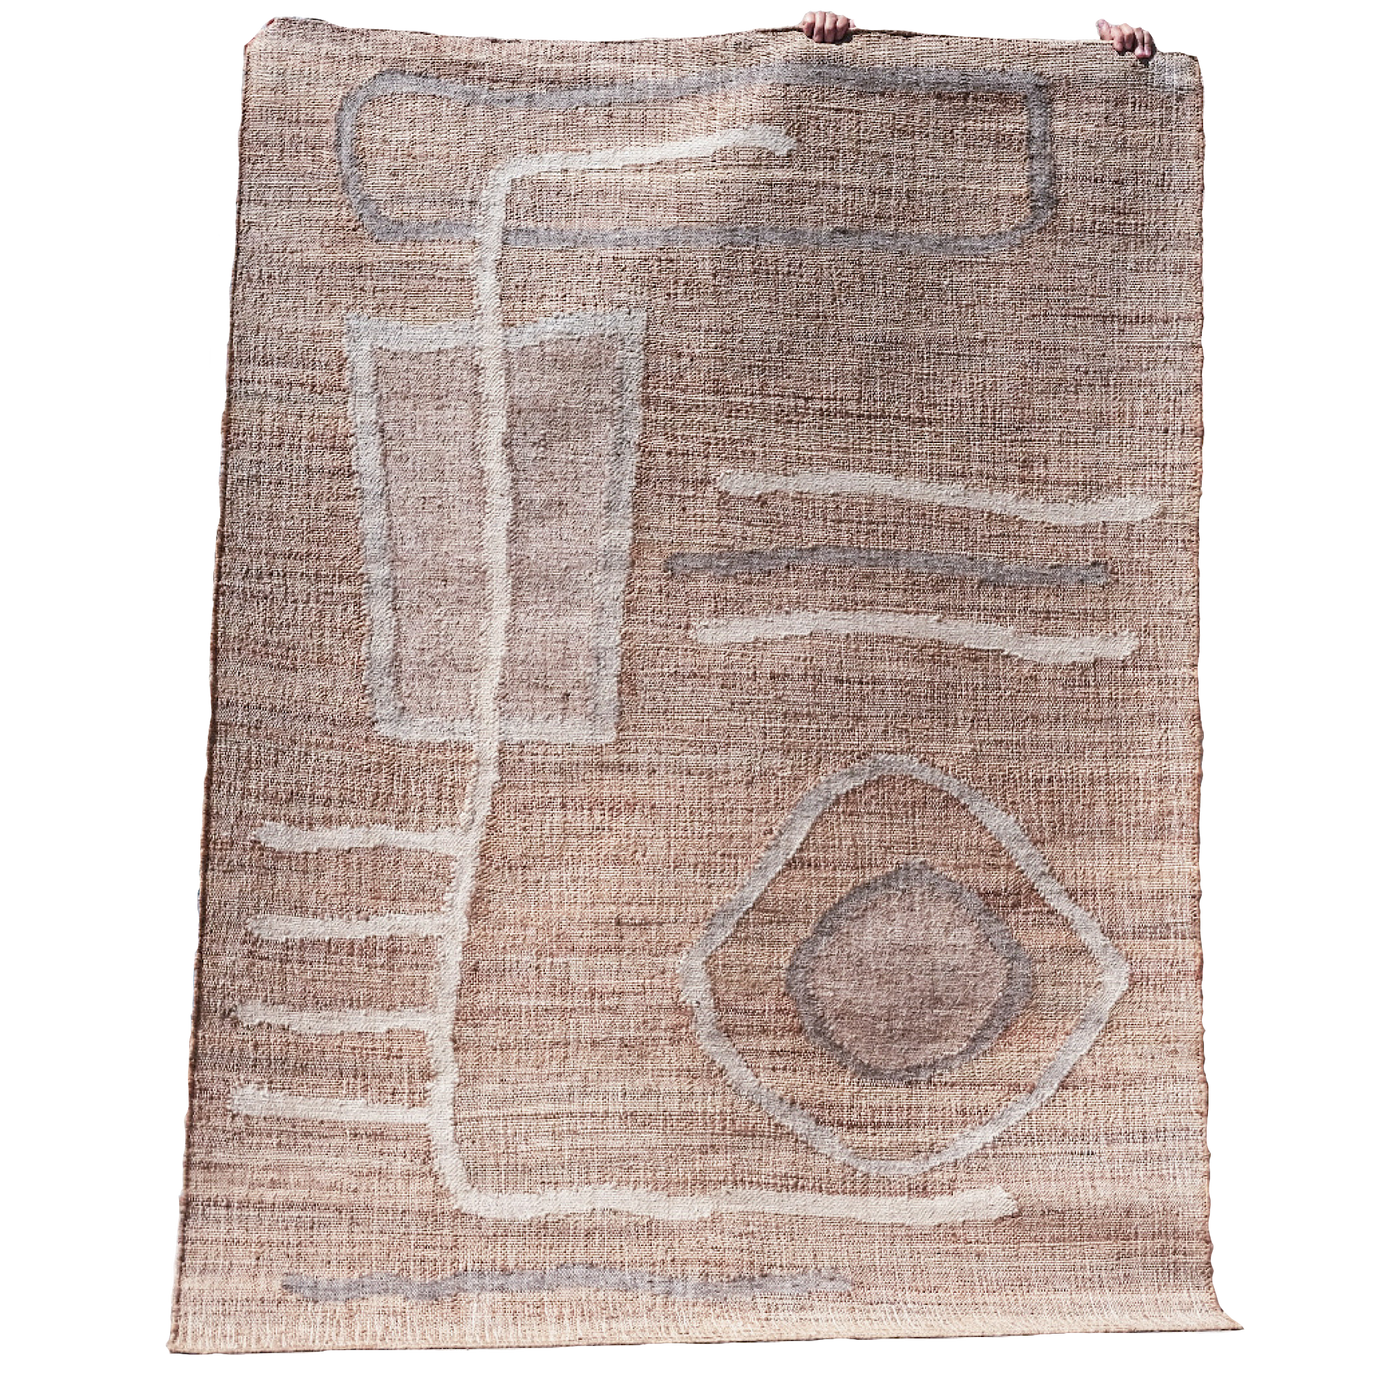 Bajaha - Indian carpet woven hand in jute